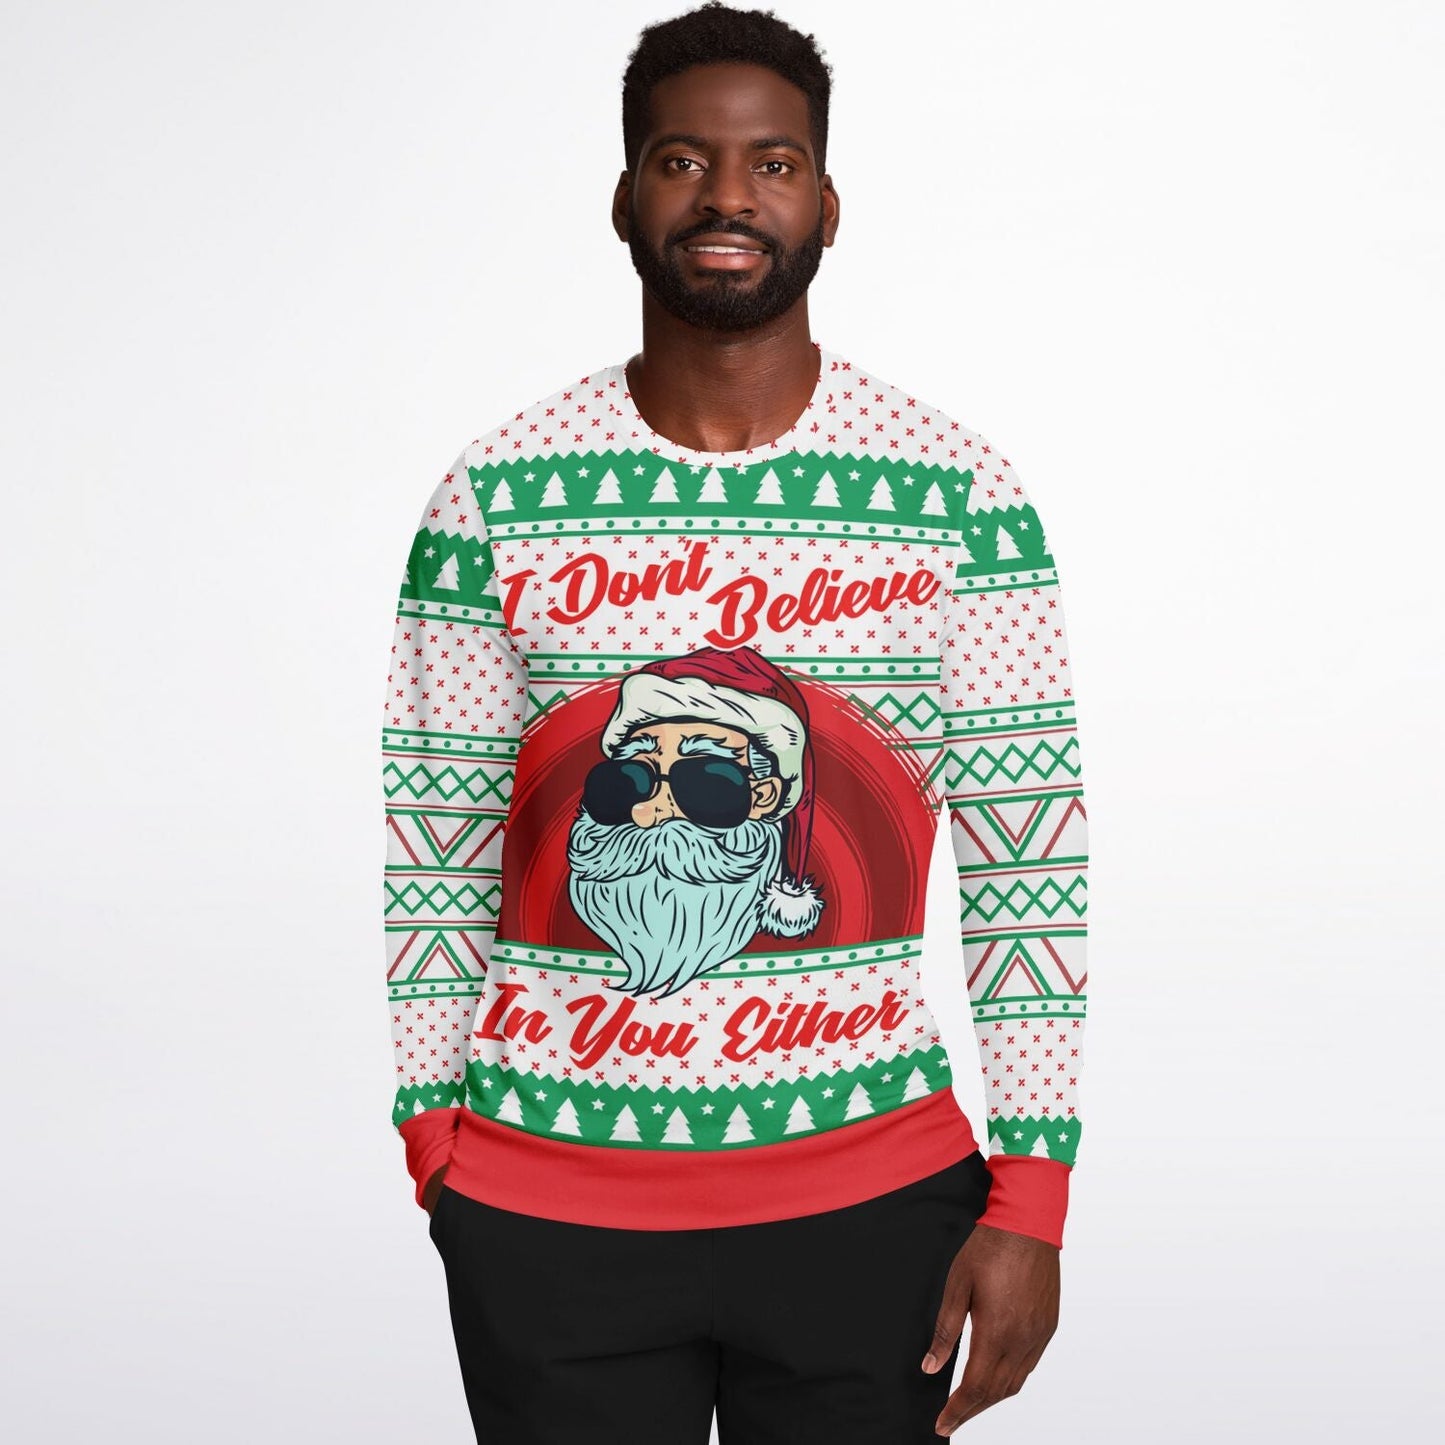 I Don't Believe in You Either Ugly Christmas Sweatshirt Fashion Sweatshirt - AOP Subliminator 